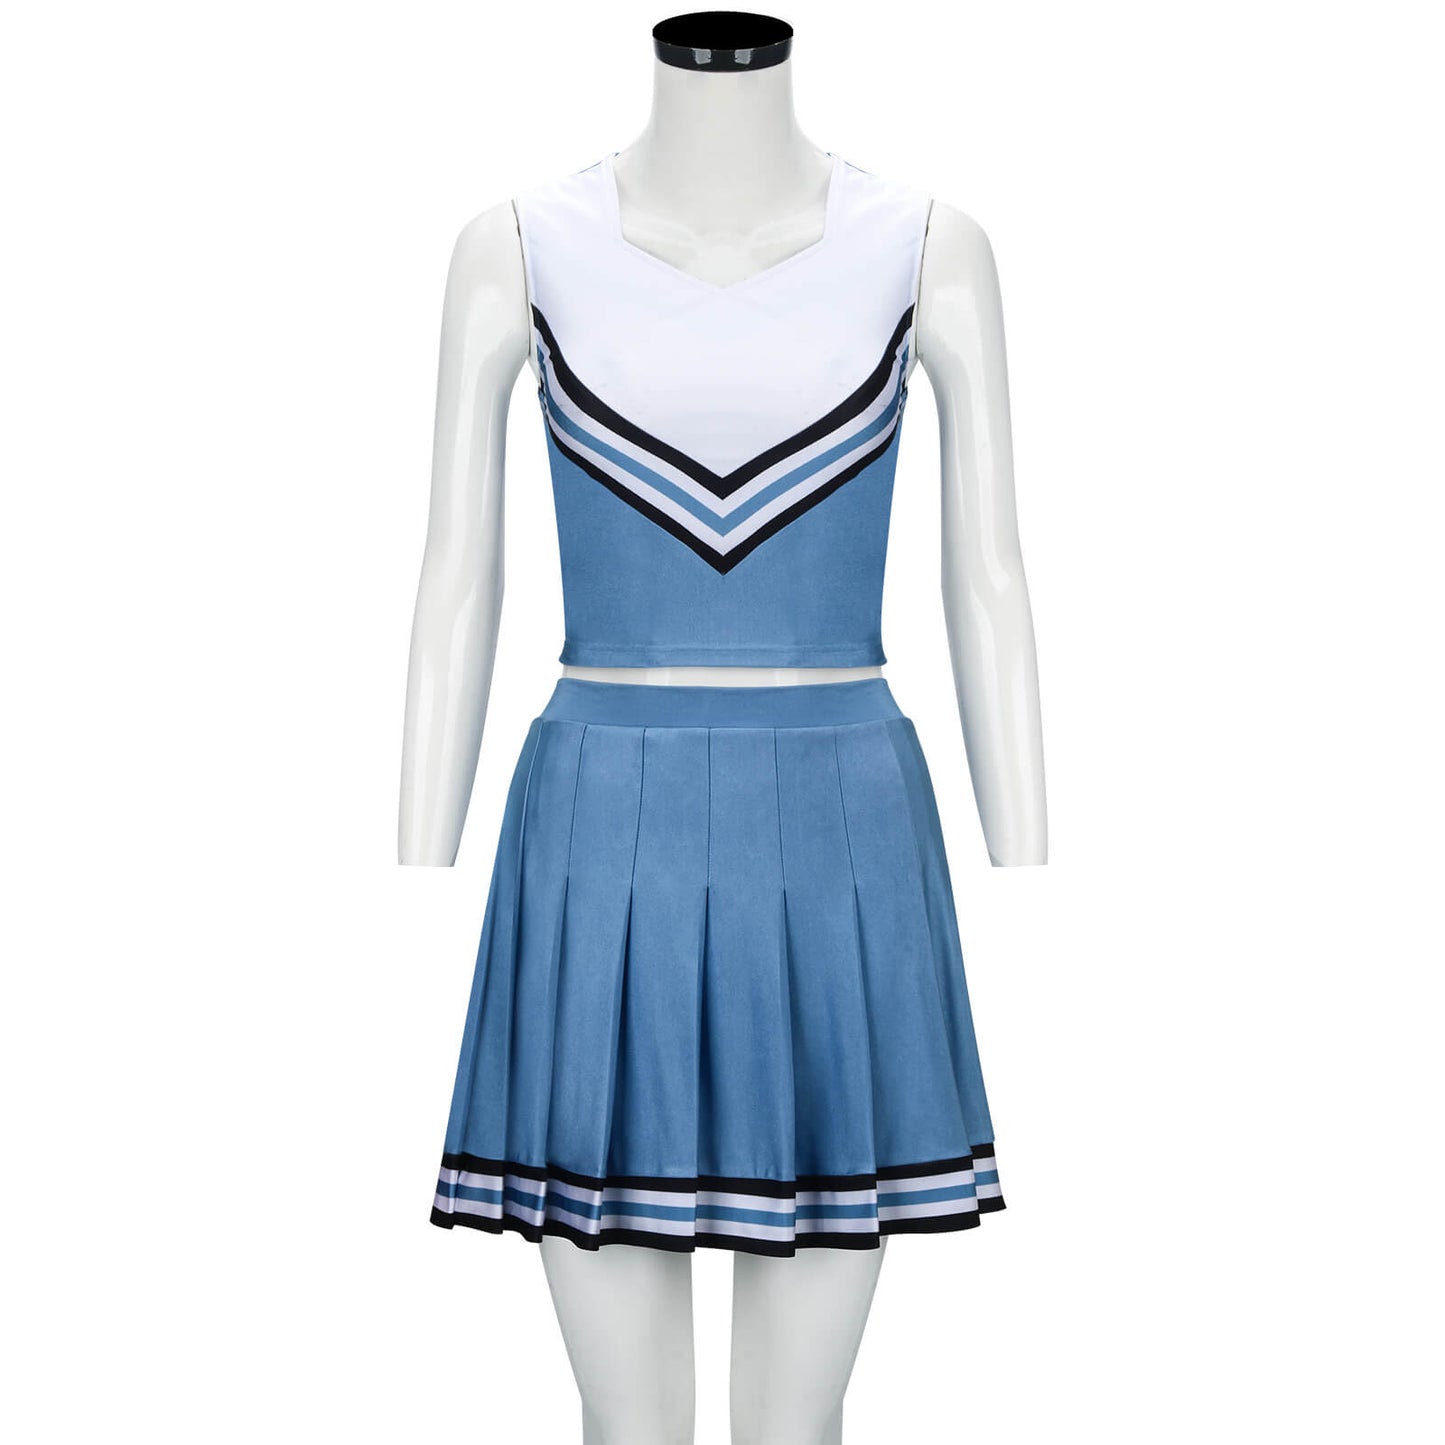 The Princess Diaries Lana Thomas Cheerleading Uniform Olivia Rodrigo Good 4 U Outfit